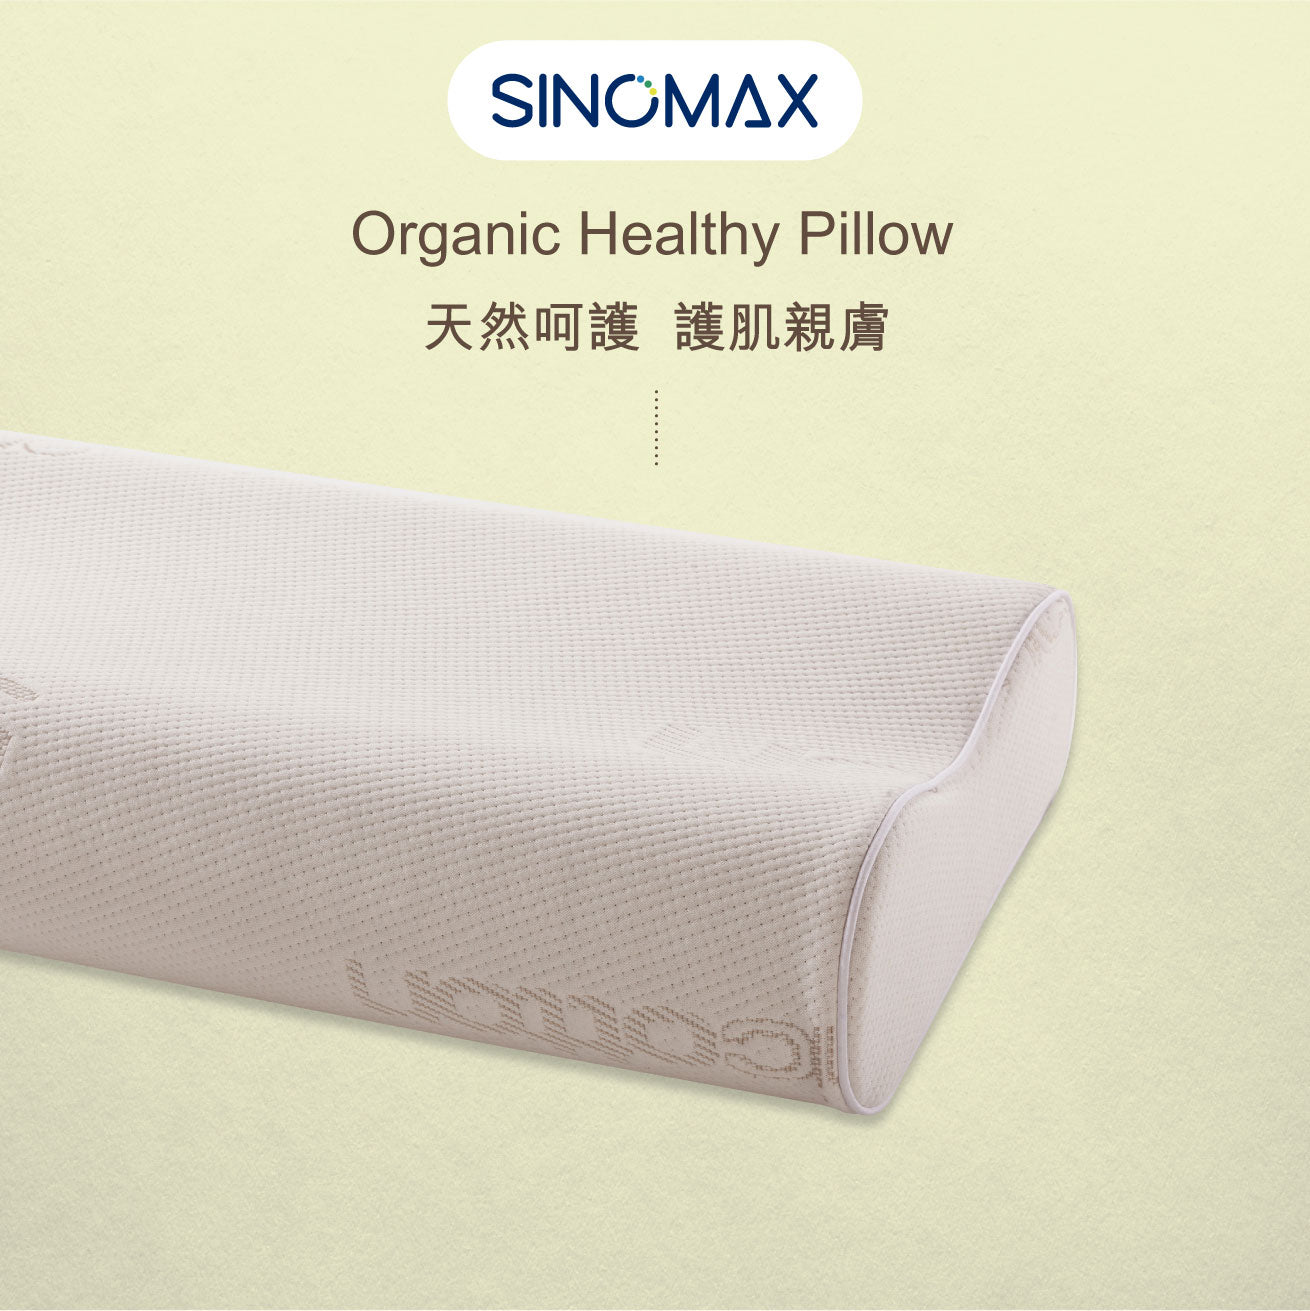 Organic Healthy Pillow